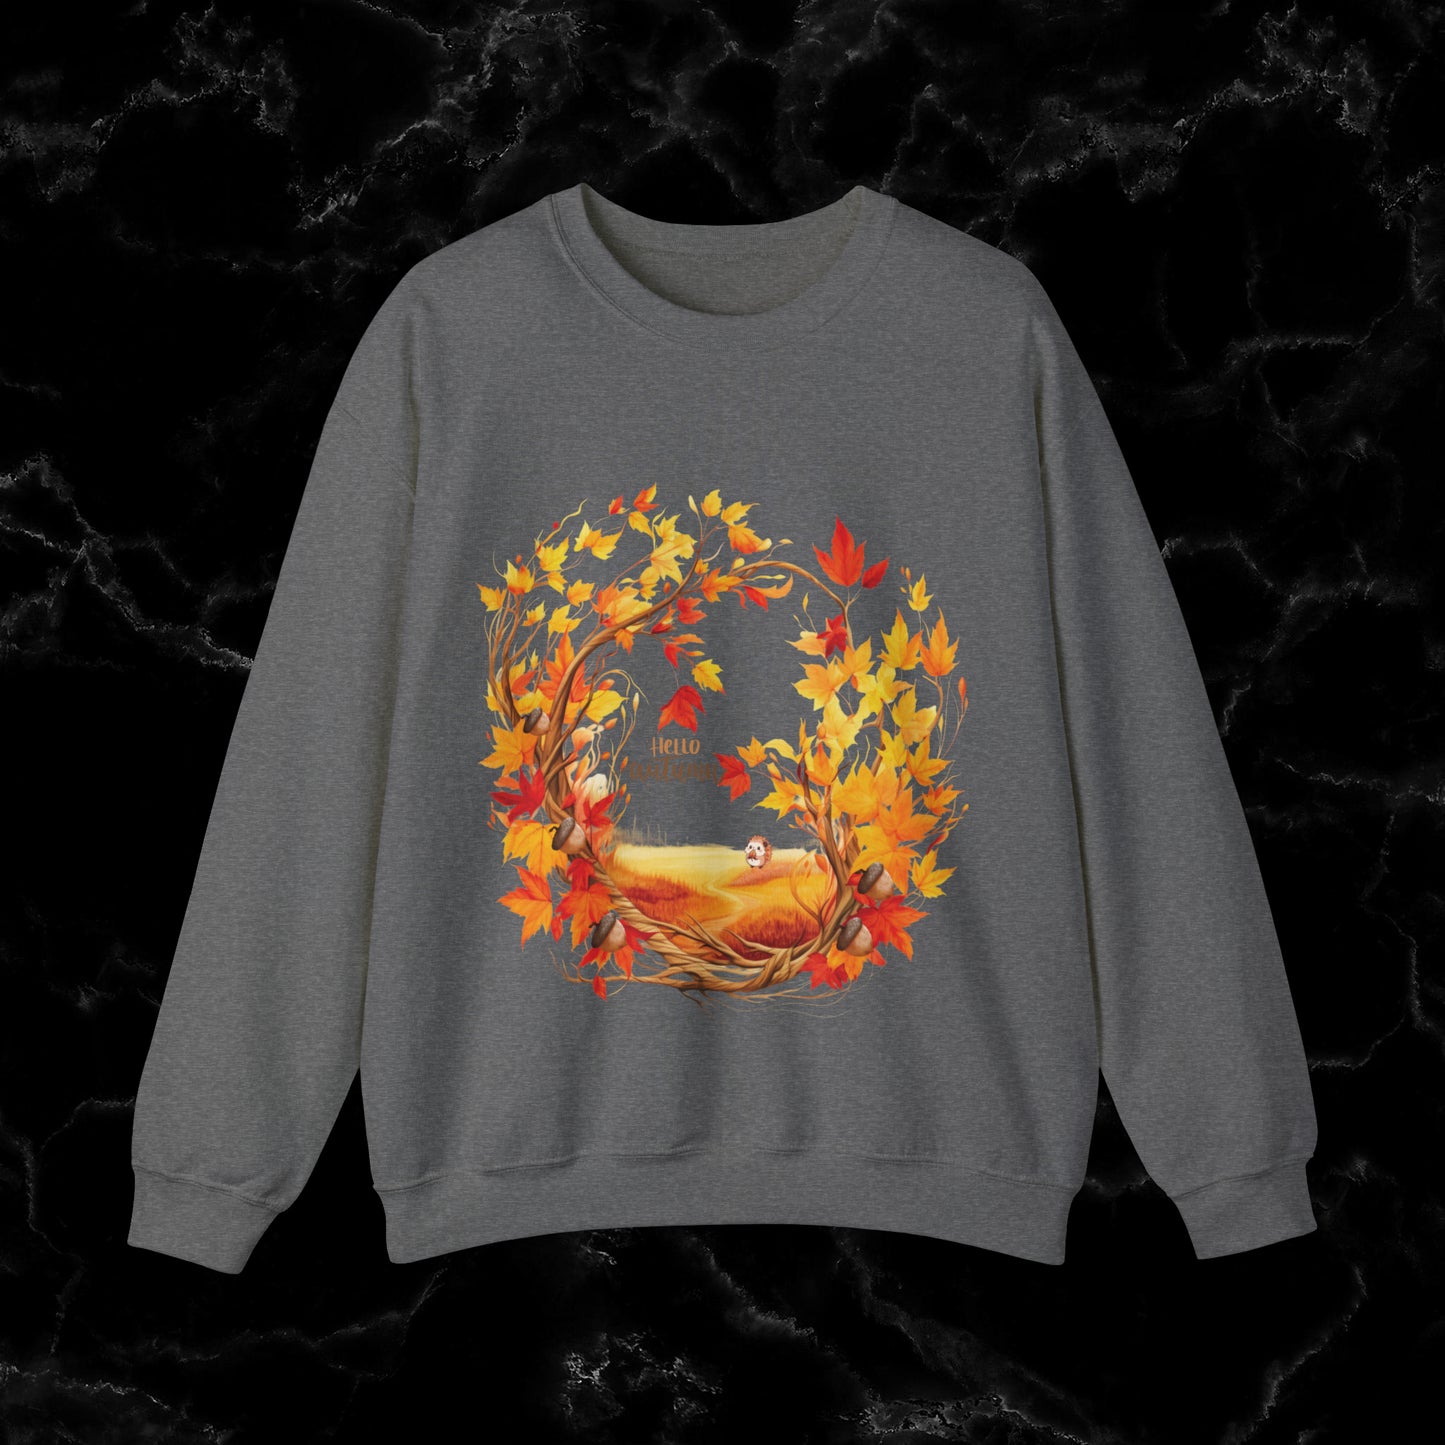 Hello Autumn Sweatshirt | Fall Design - Fall Seasonal Sweatshirt - Beauty Of Autumn Sweatshirt S Graphite Heather 